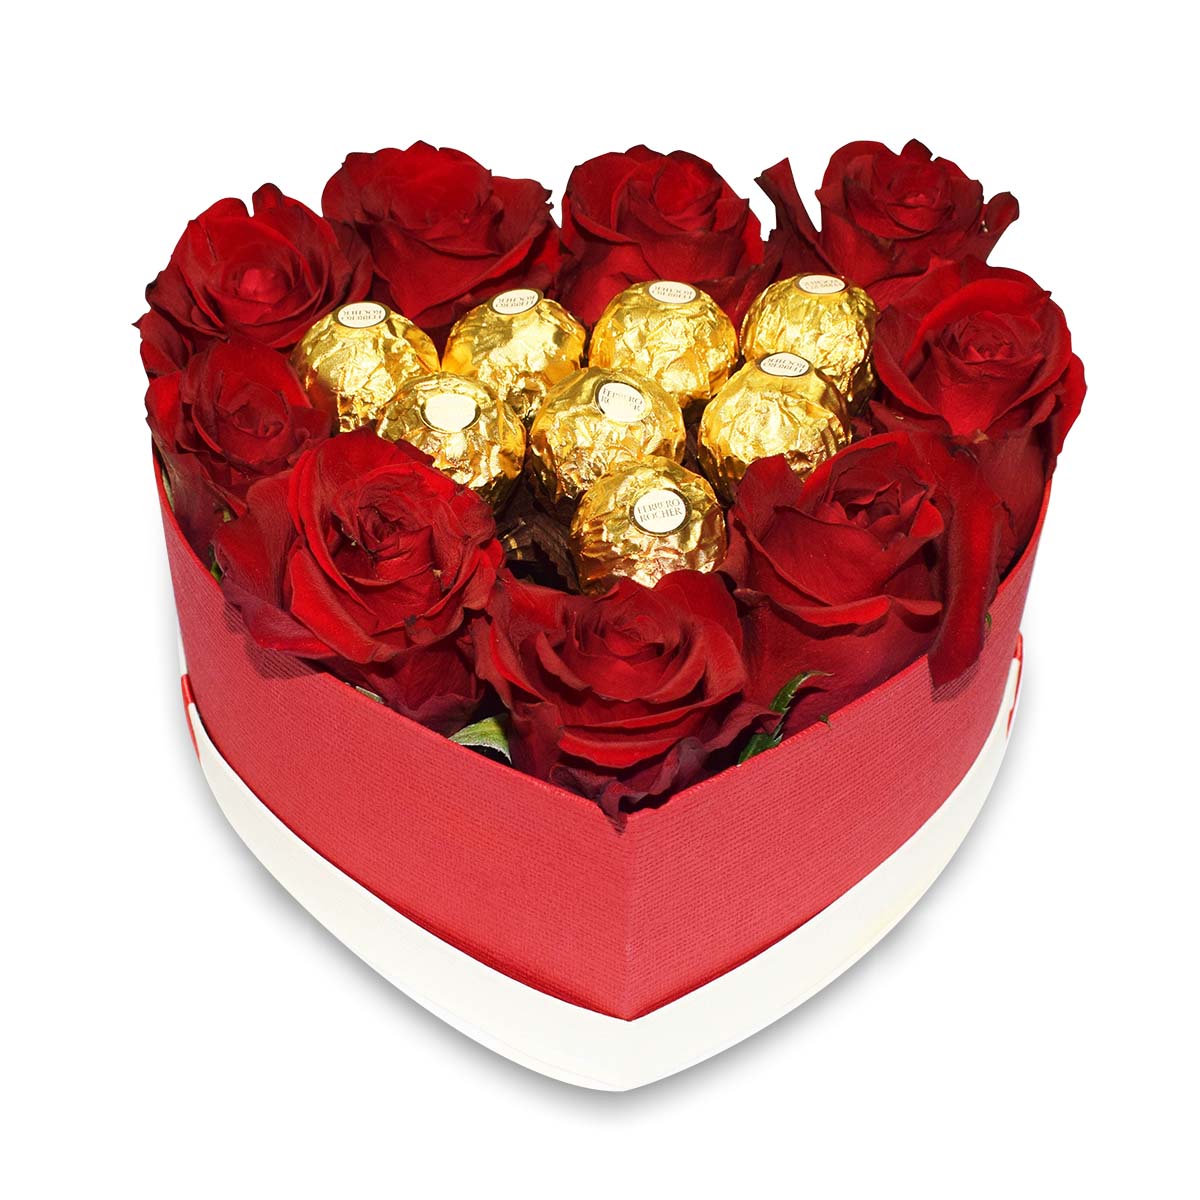 Boite Coeur avec des roses rouges - Grand format - Hadiia